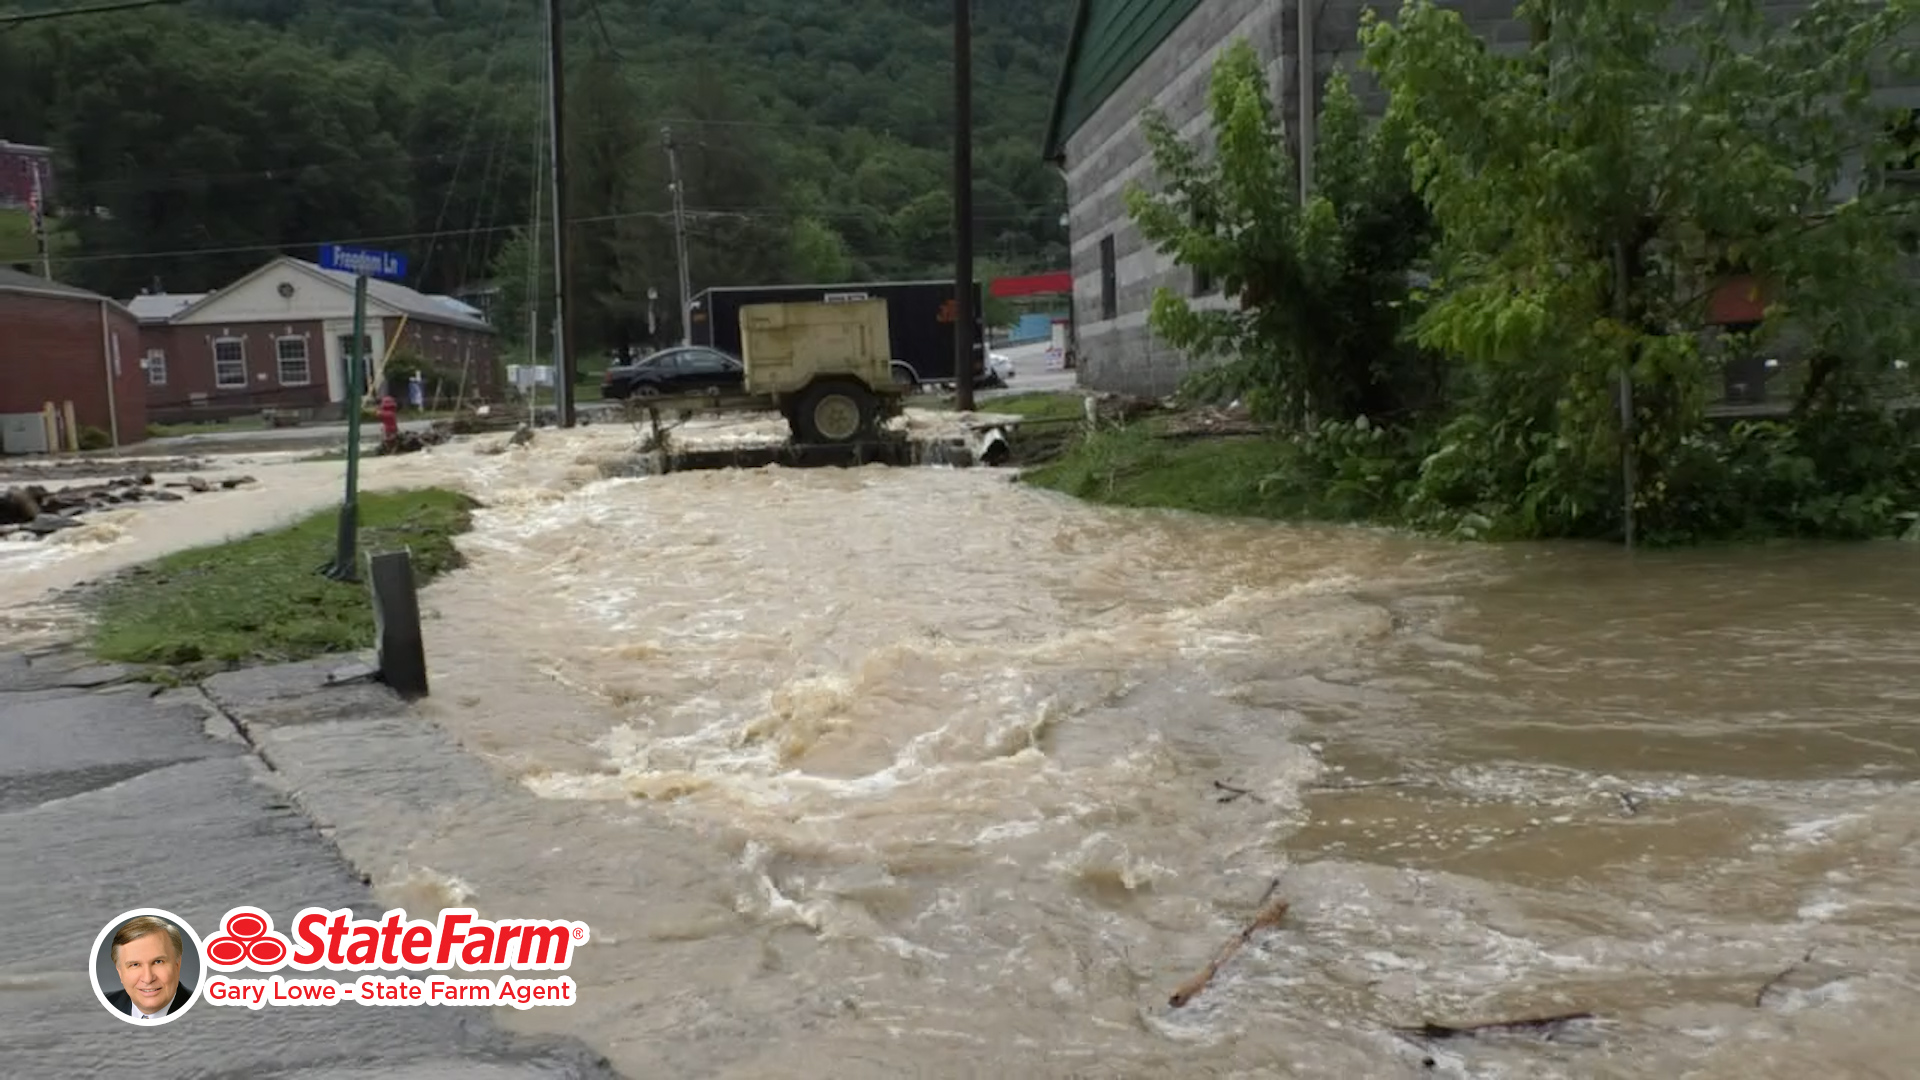 President issues disaster declaration for East Kentucky flooding